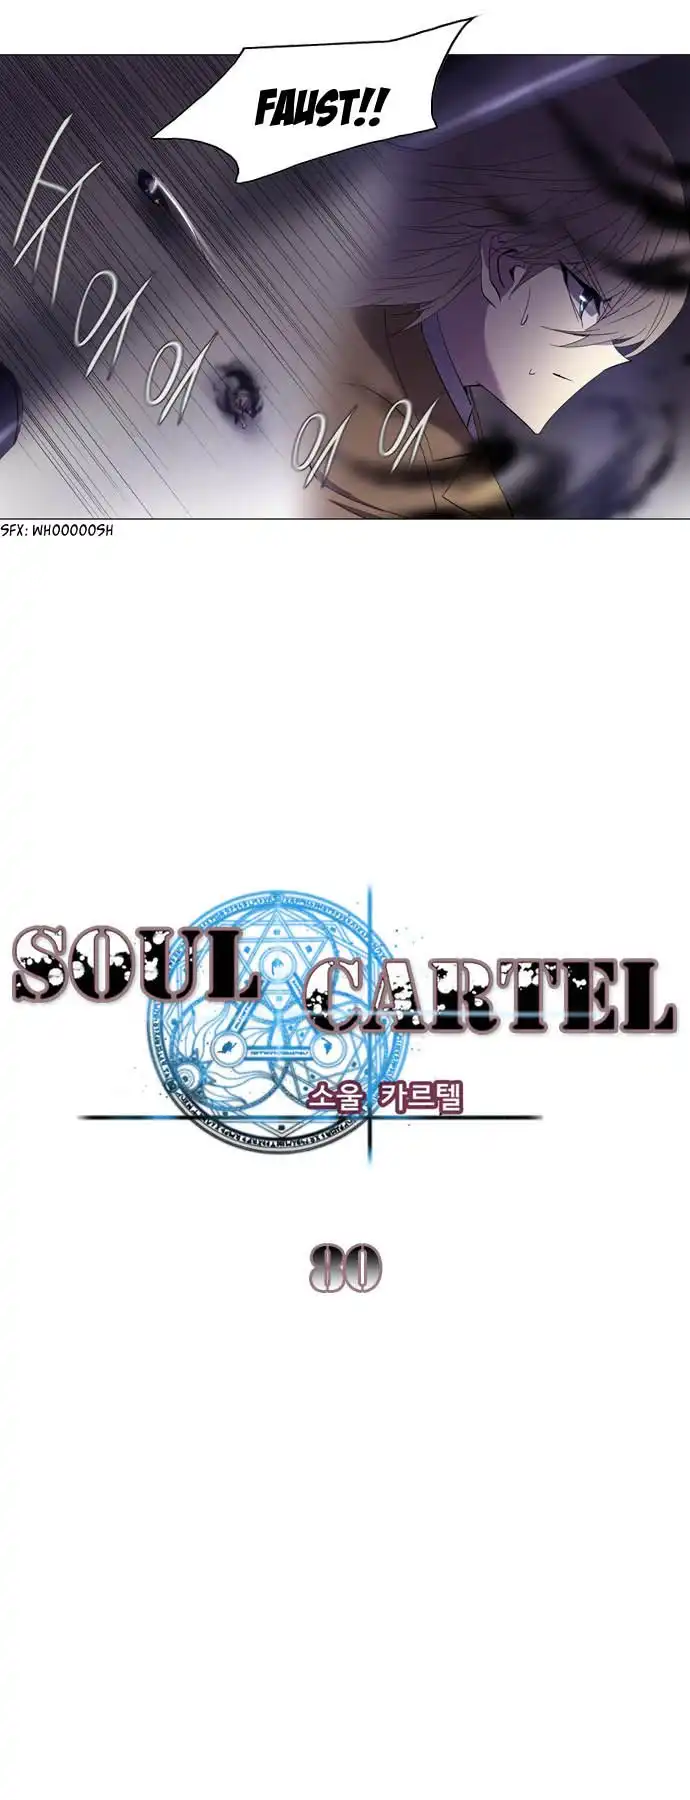 Soul Cartel Chapter 80